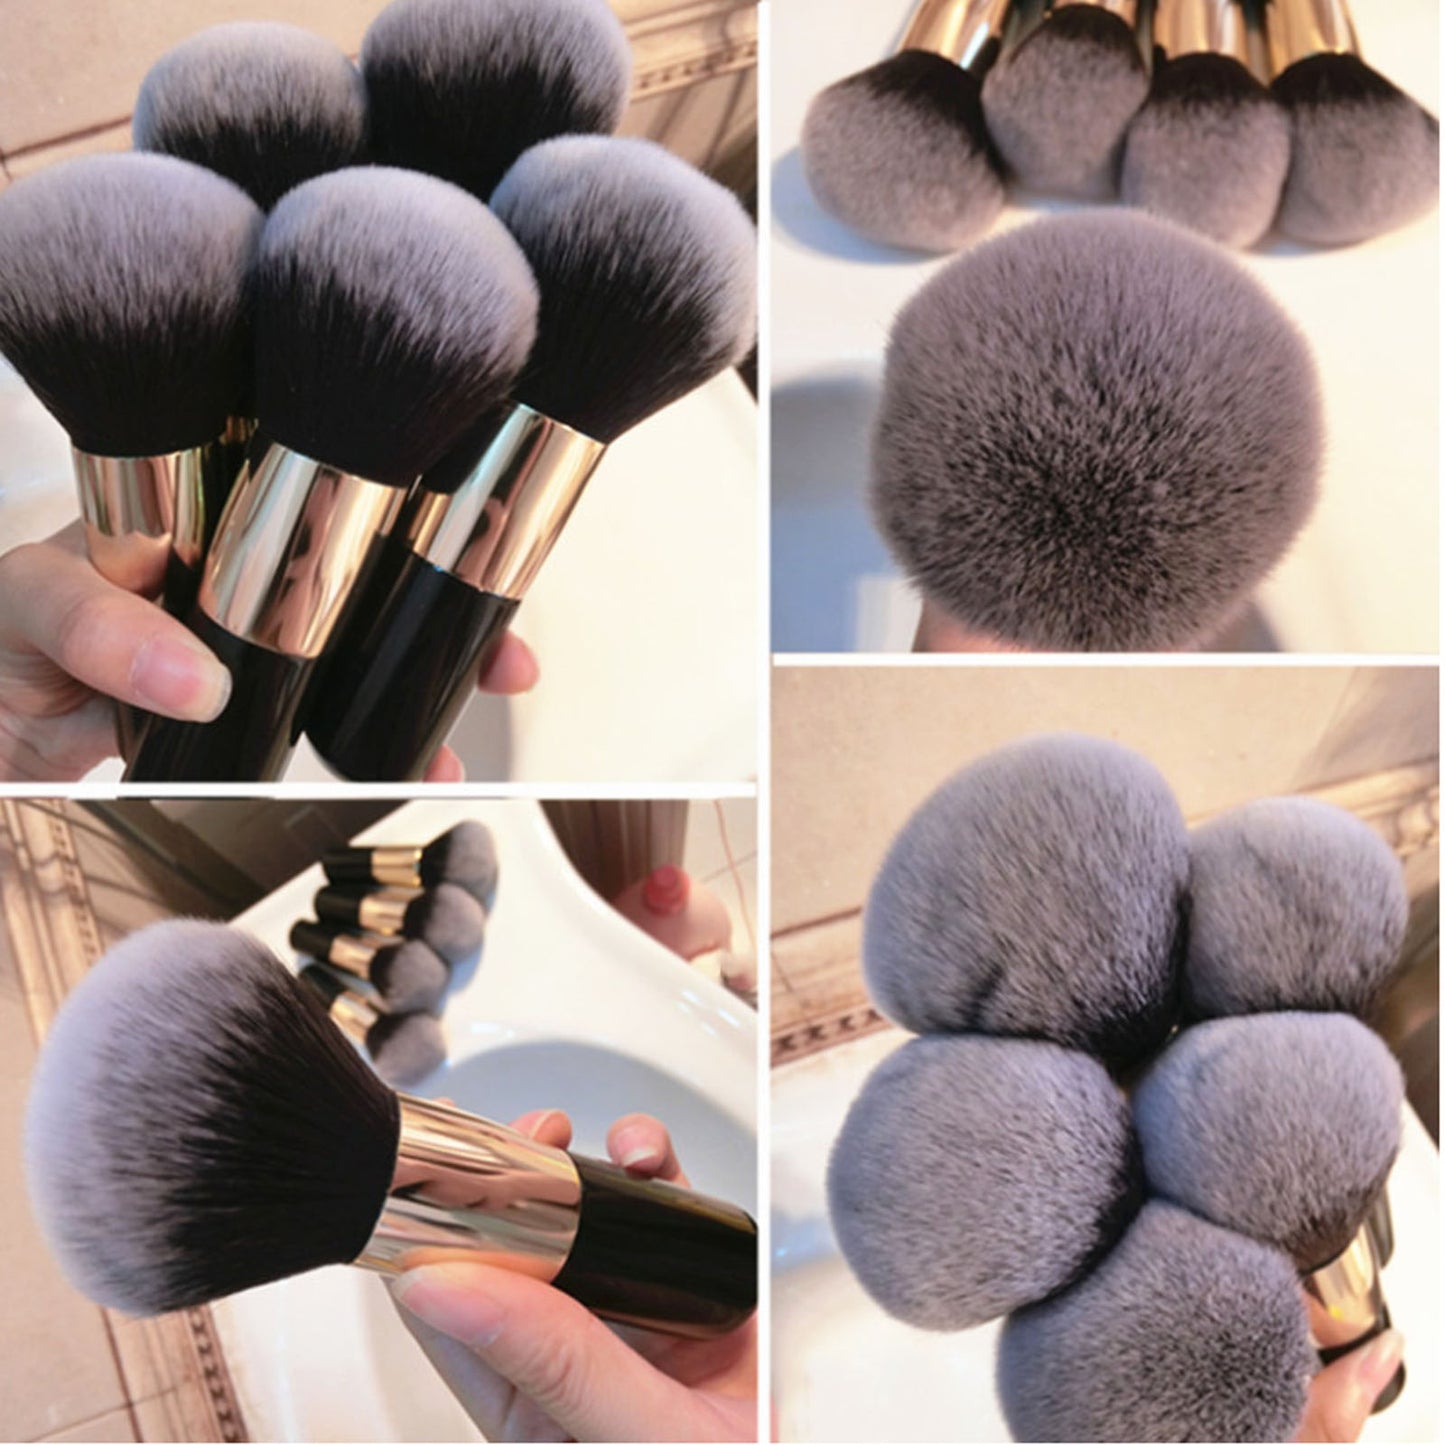 New Pro Large Size Makeup Brush For Loose Powder Foundation Powder Blush Highlighter Brush Soft Hair Cosmetics Lady Make Up Tool